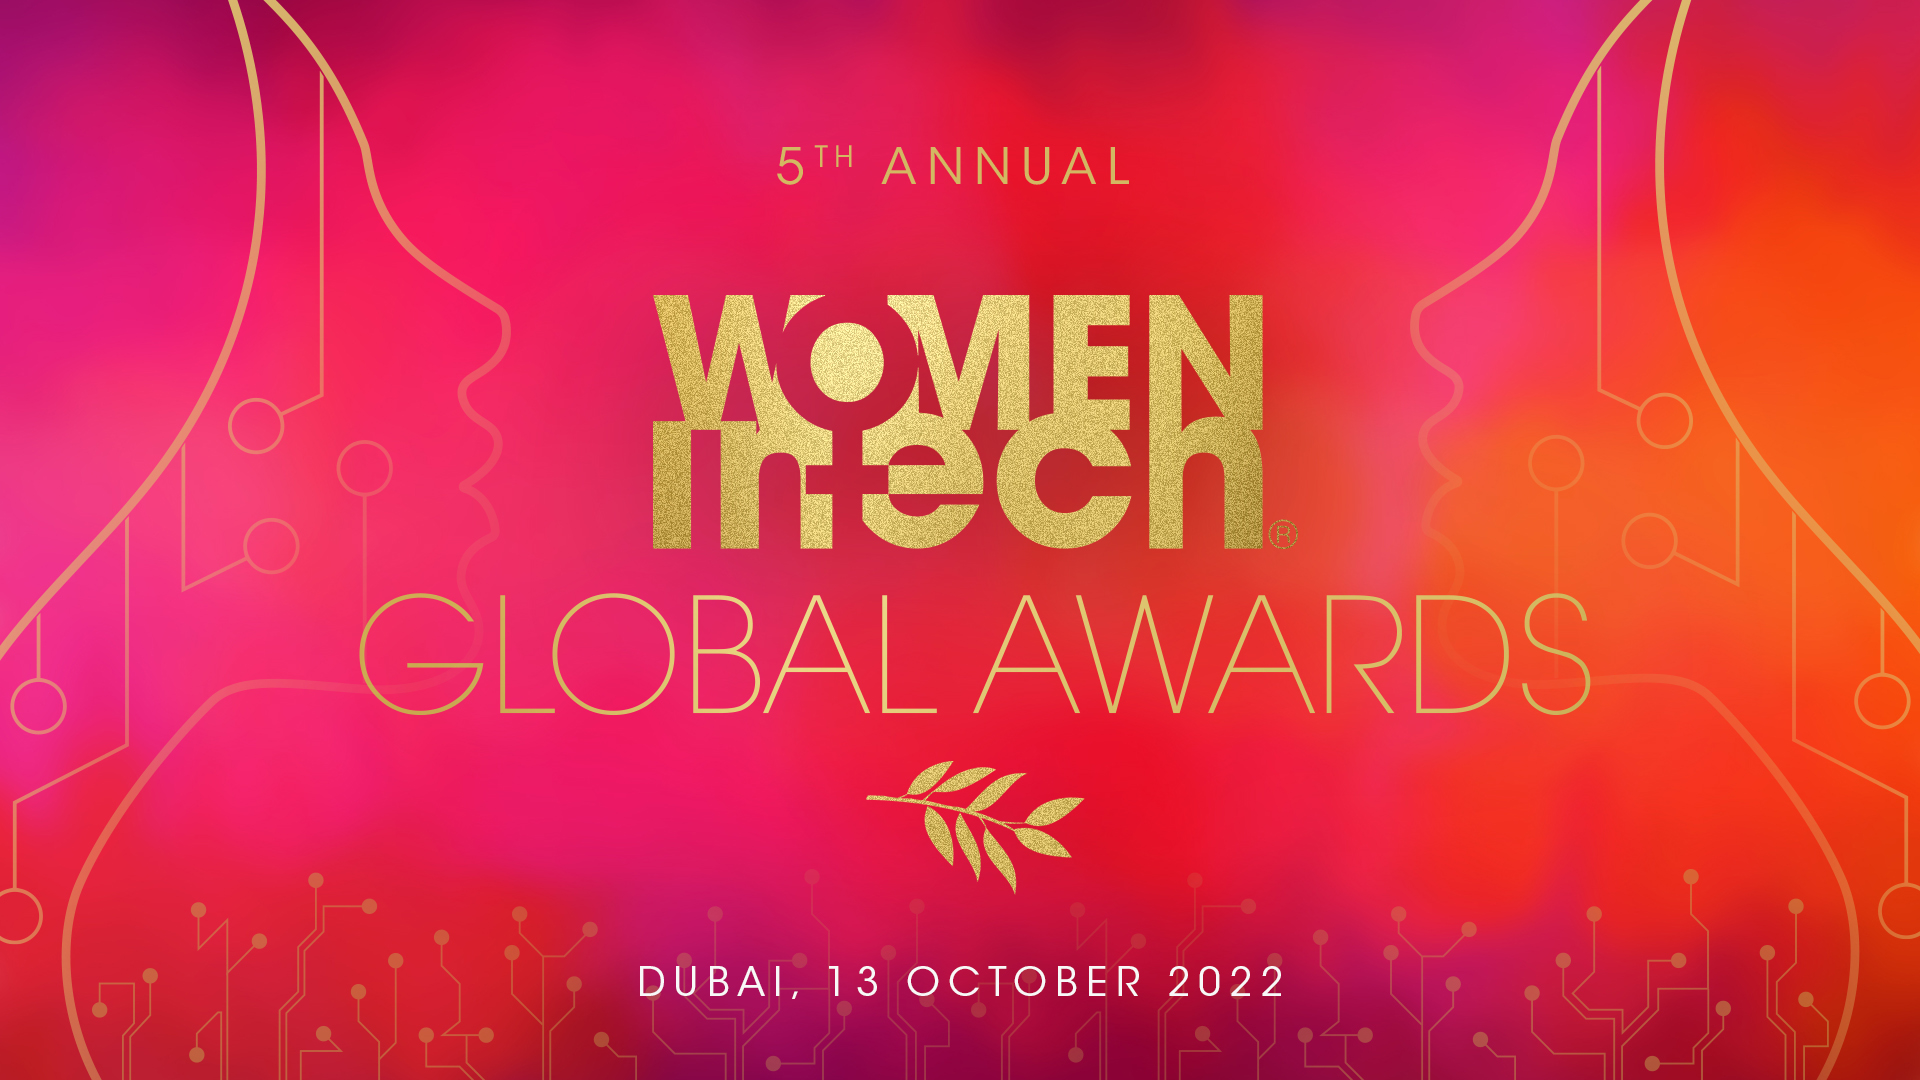 Women in Tech Global Awards - Dubai, October 2022